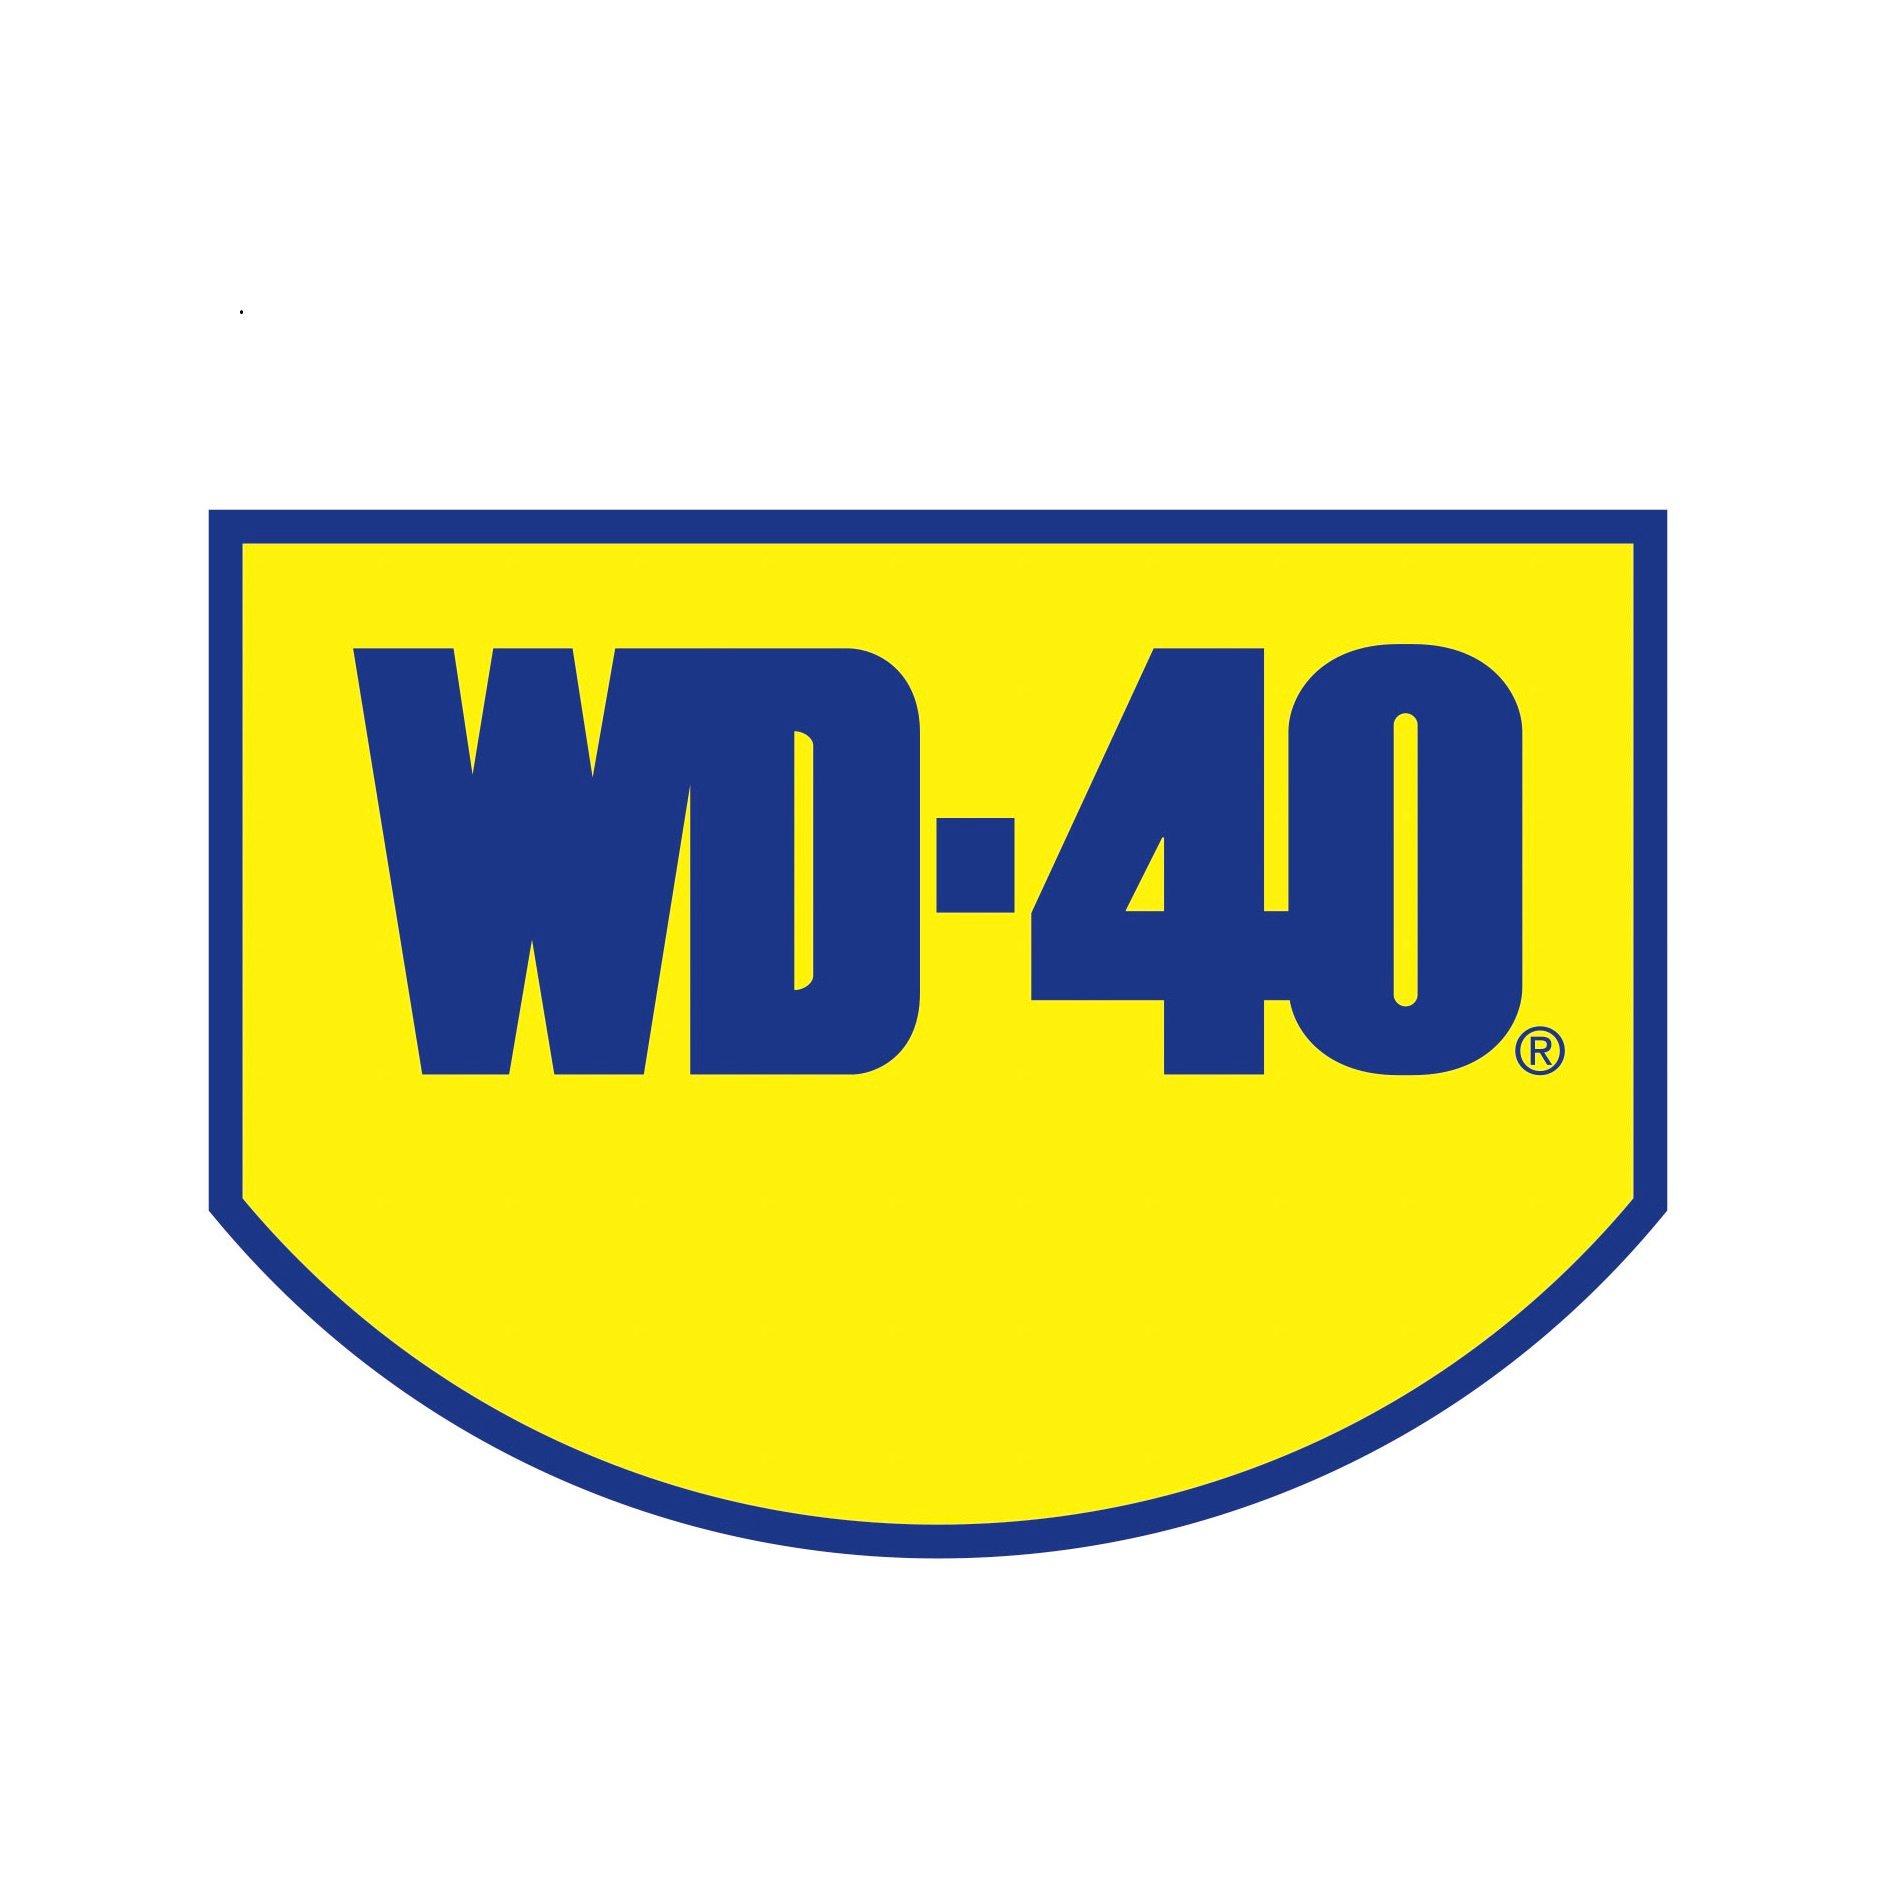 WD40 online sale listings at Kapruka